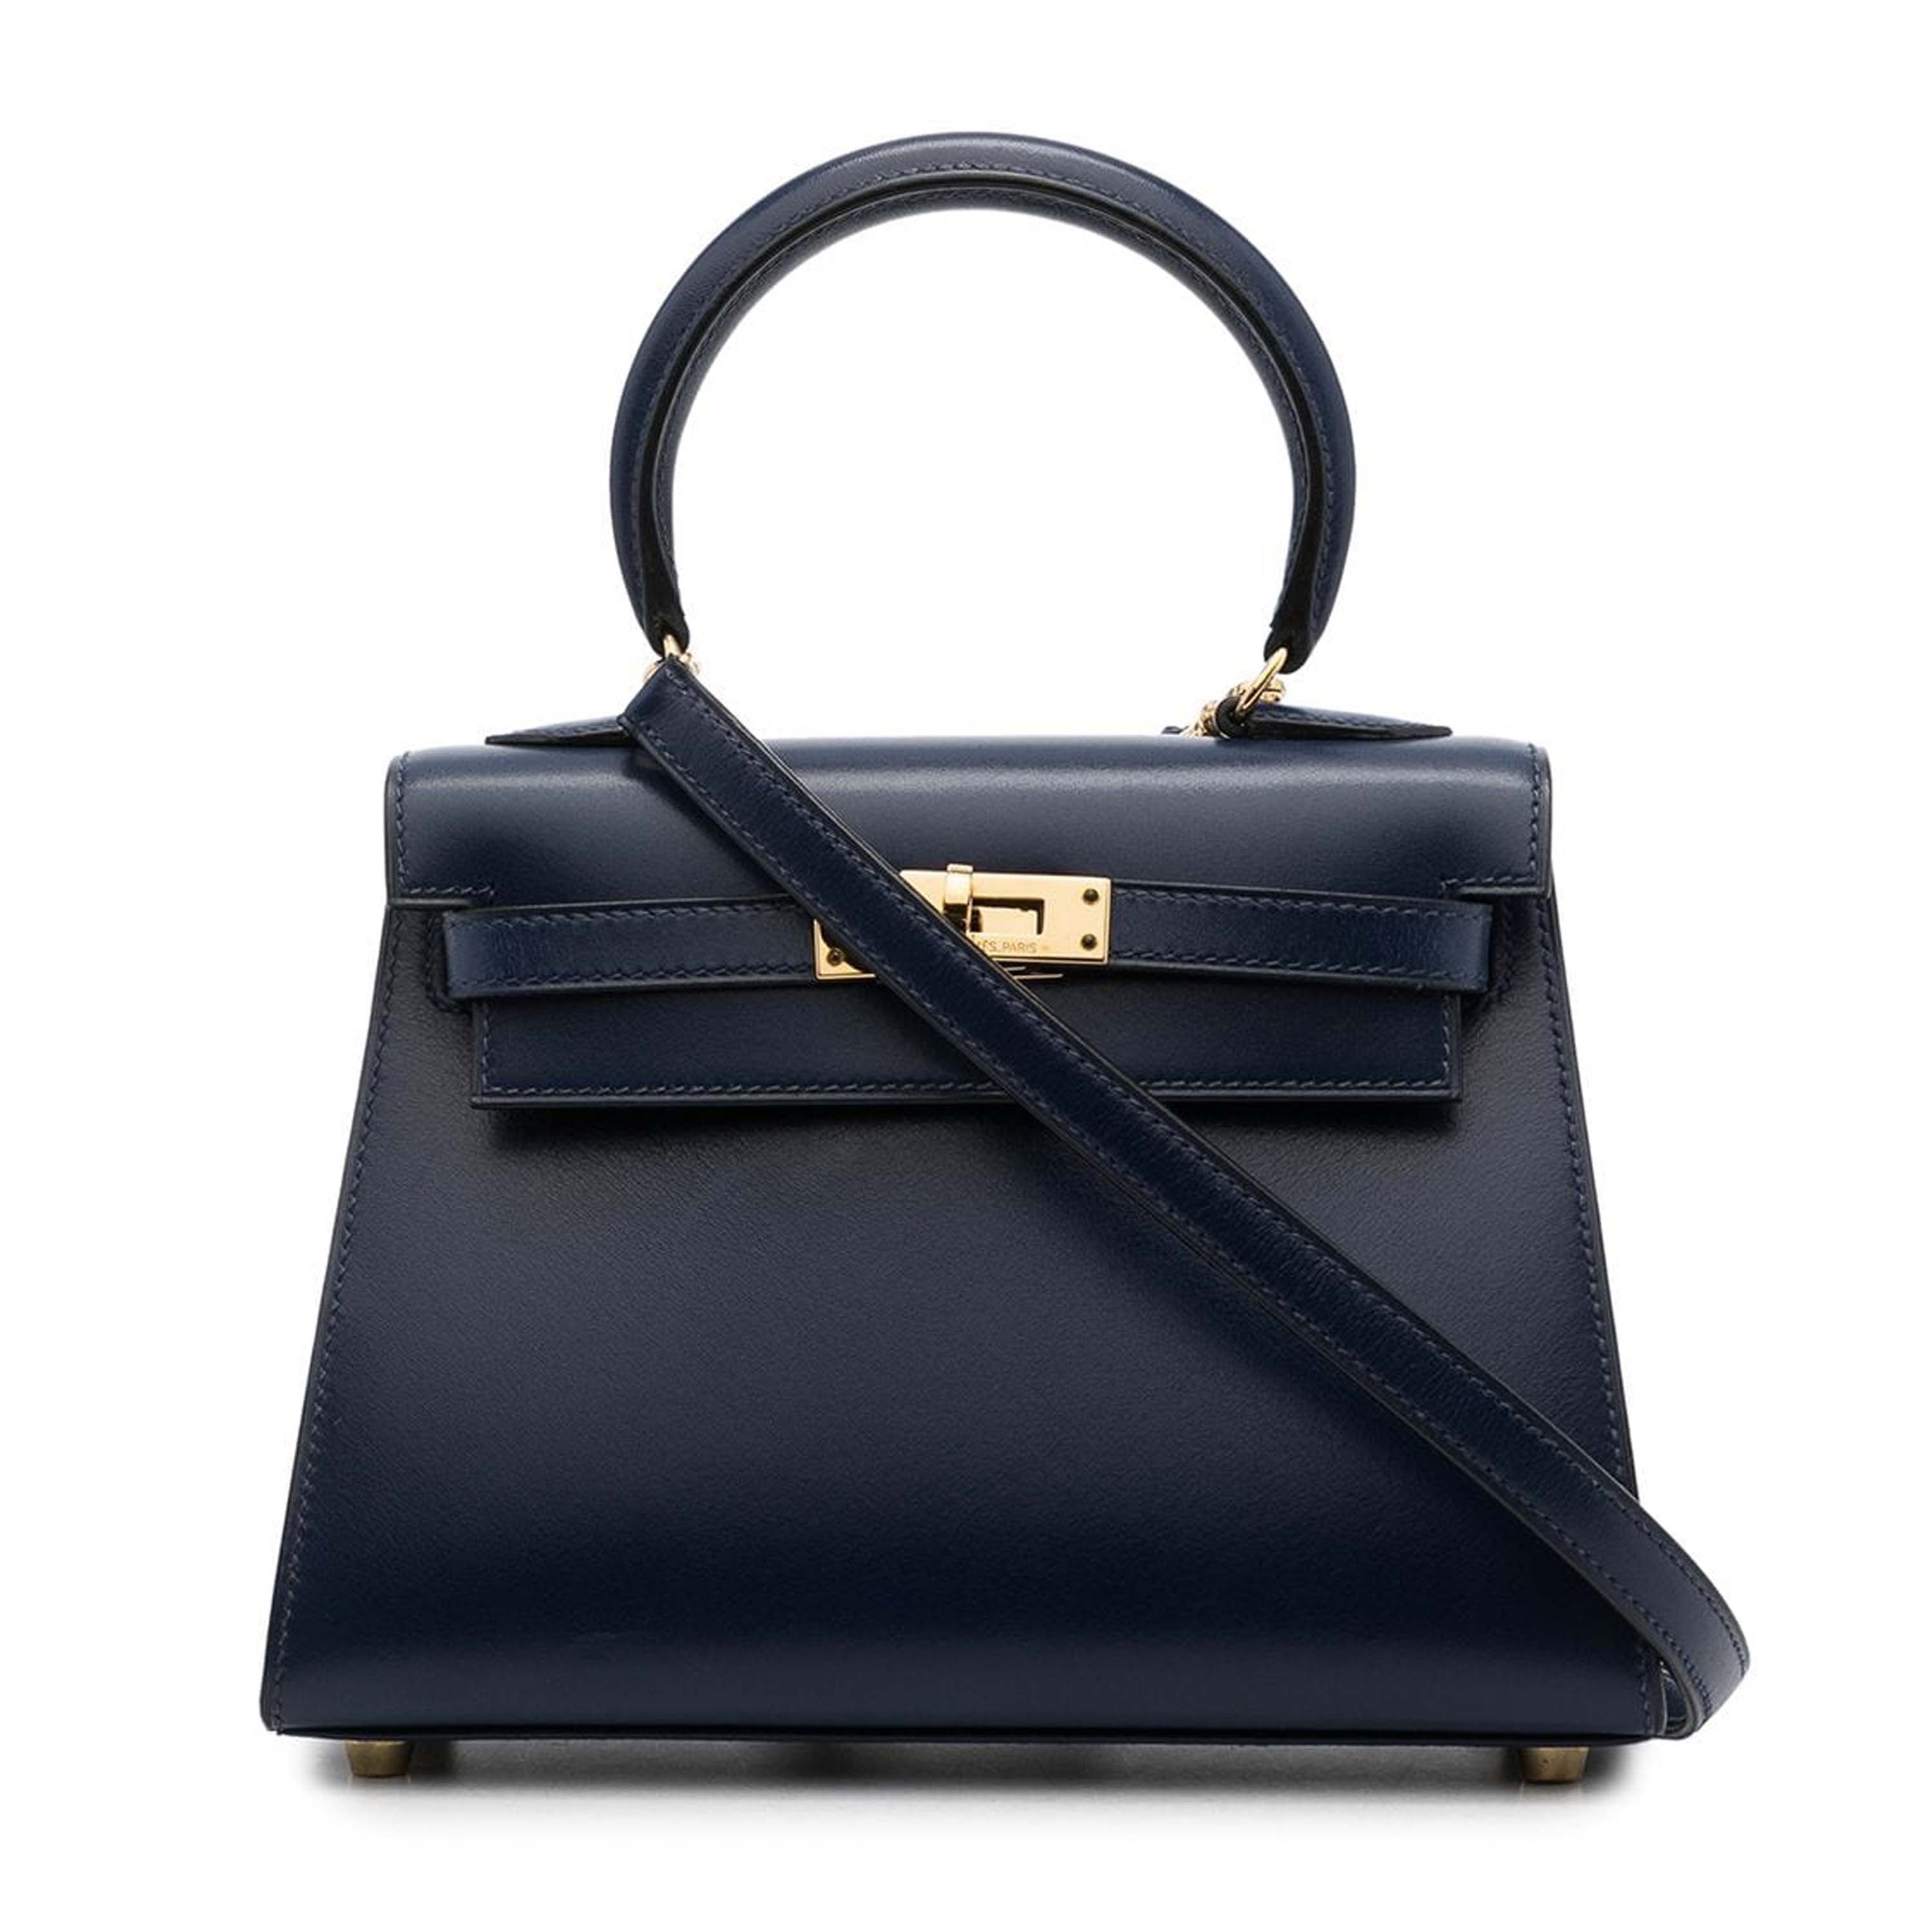 Vintage Widegate London Black Patent Leather Handbag Brown Tan Suede Grace  Kelly | eBay